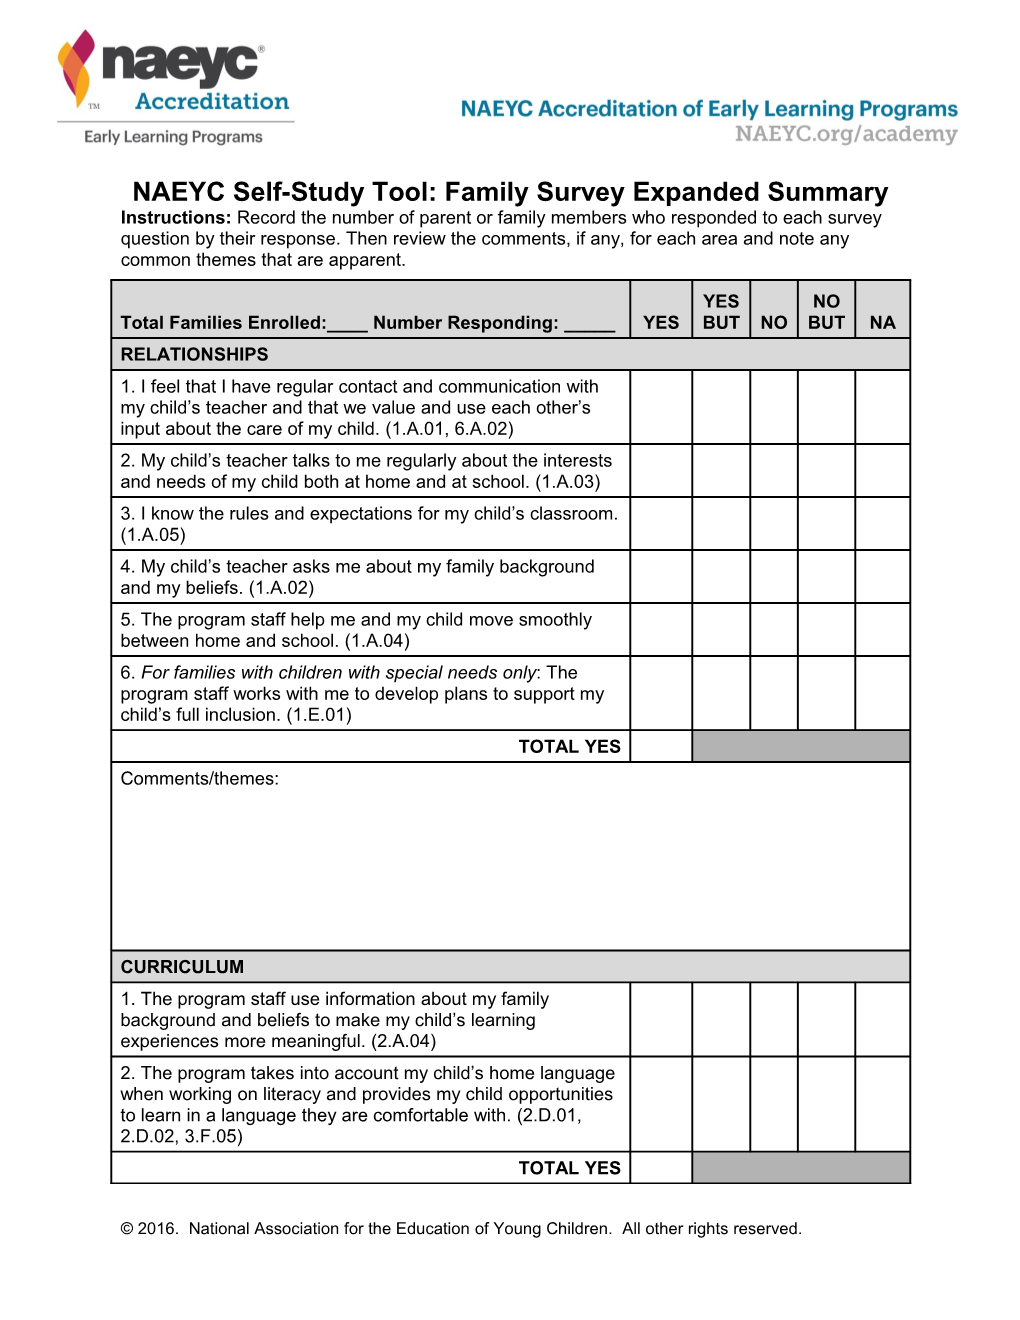 NAEYC Self-Study Tool: Family Survey Expanded Summary